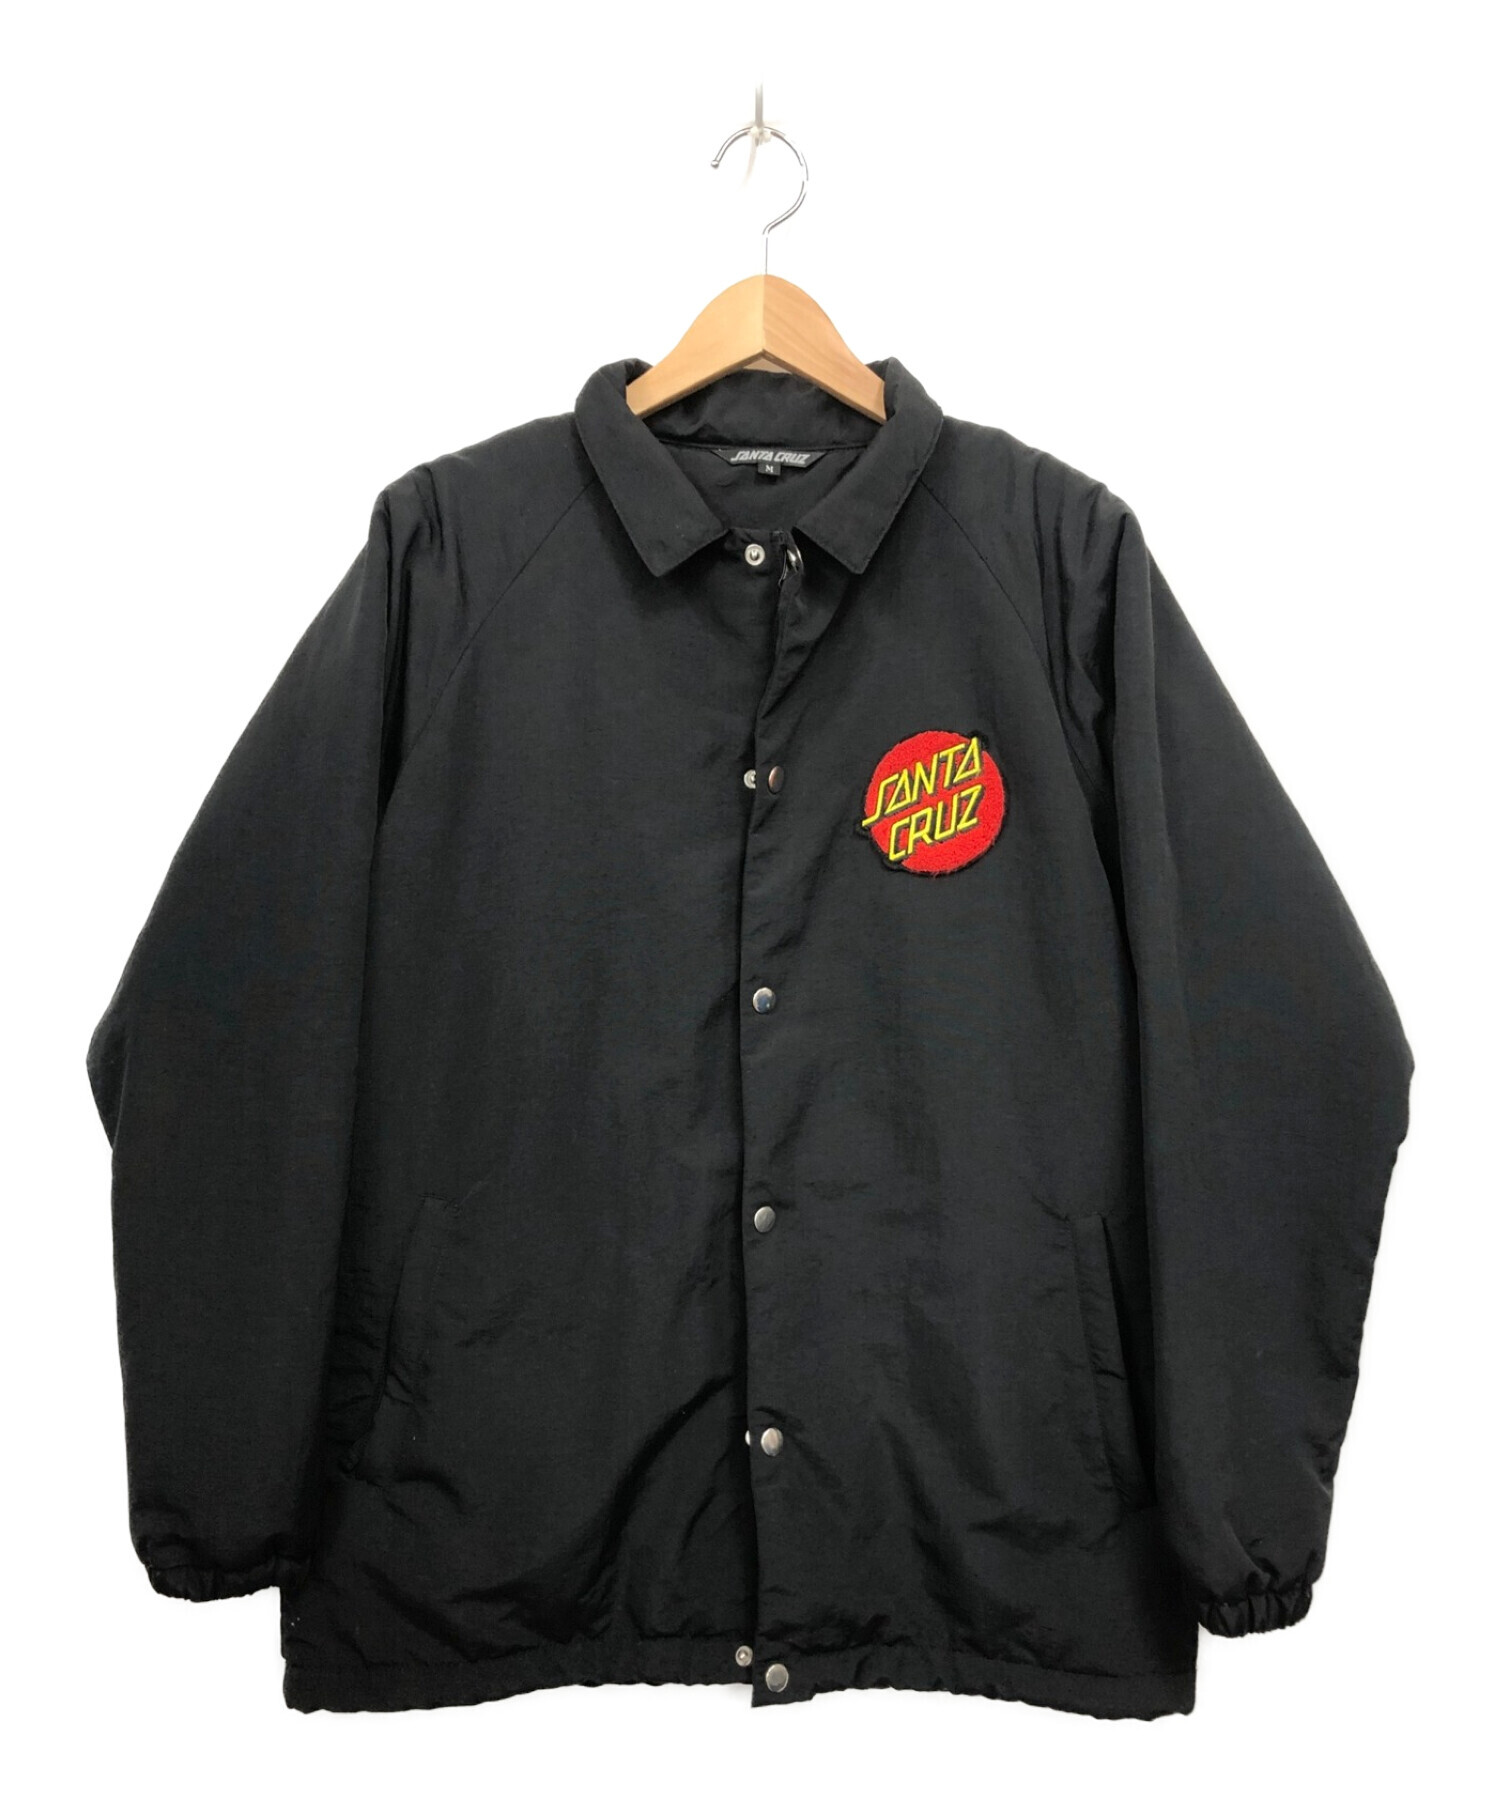 SANTA CRUZ (サンタクルーズ) ナイロンジャケット ブラック サイズ:M